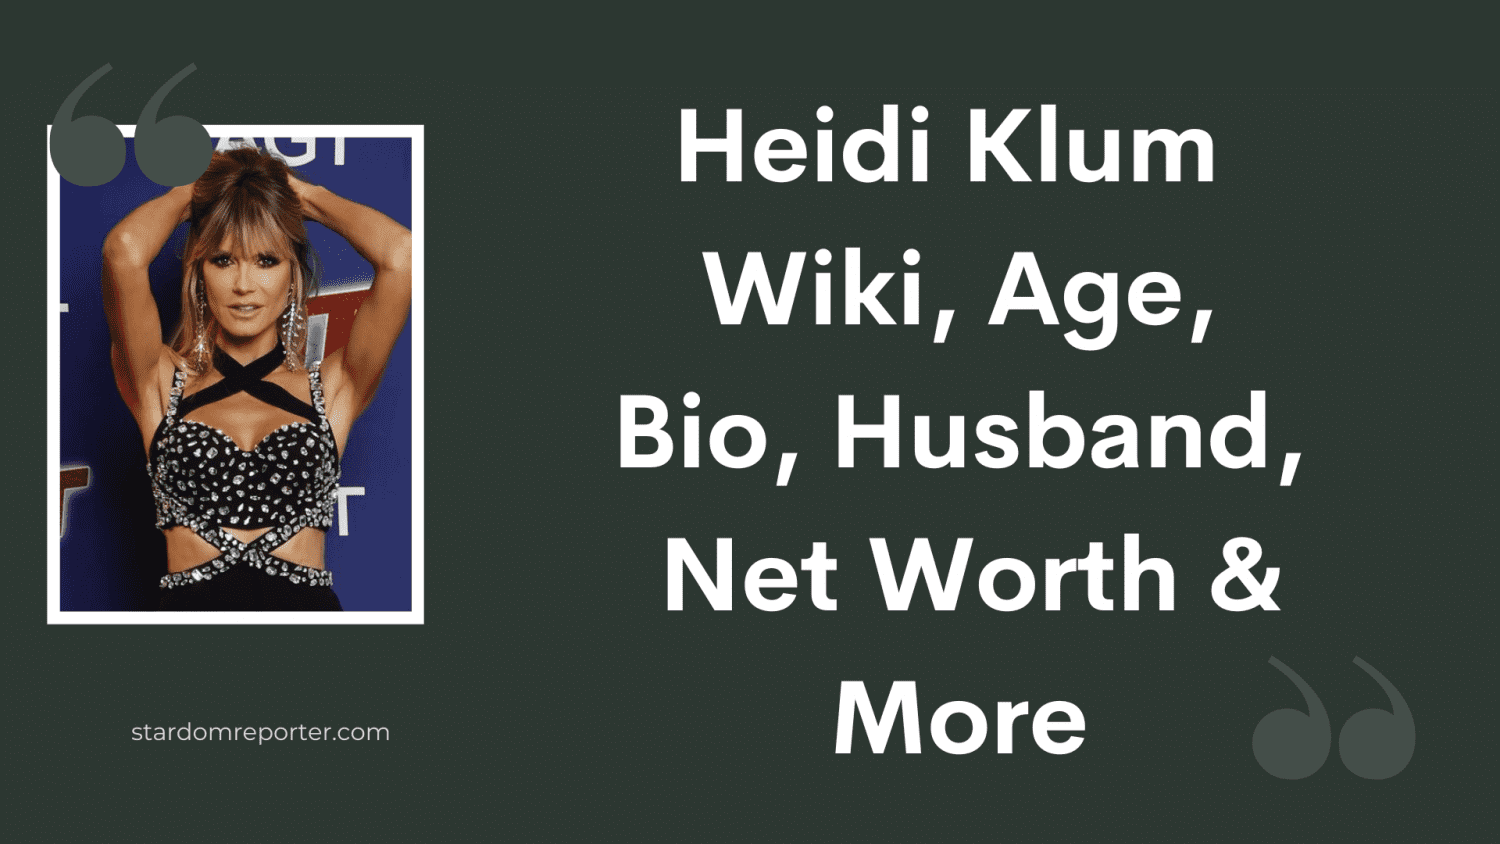 Heidi Klum Wiki, Age, Bio, Husband, Net Worth & More - 39